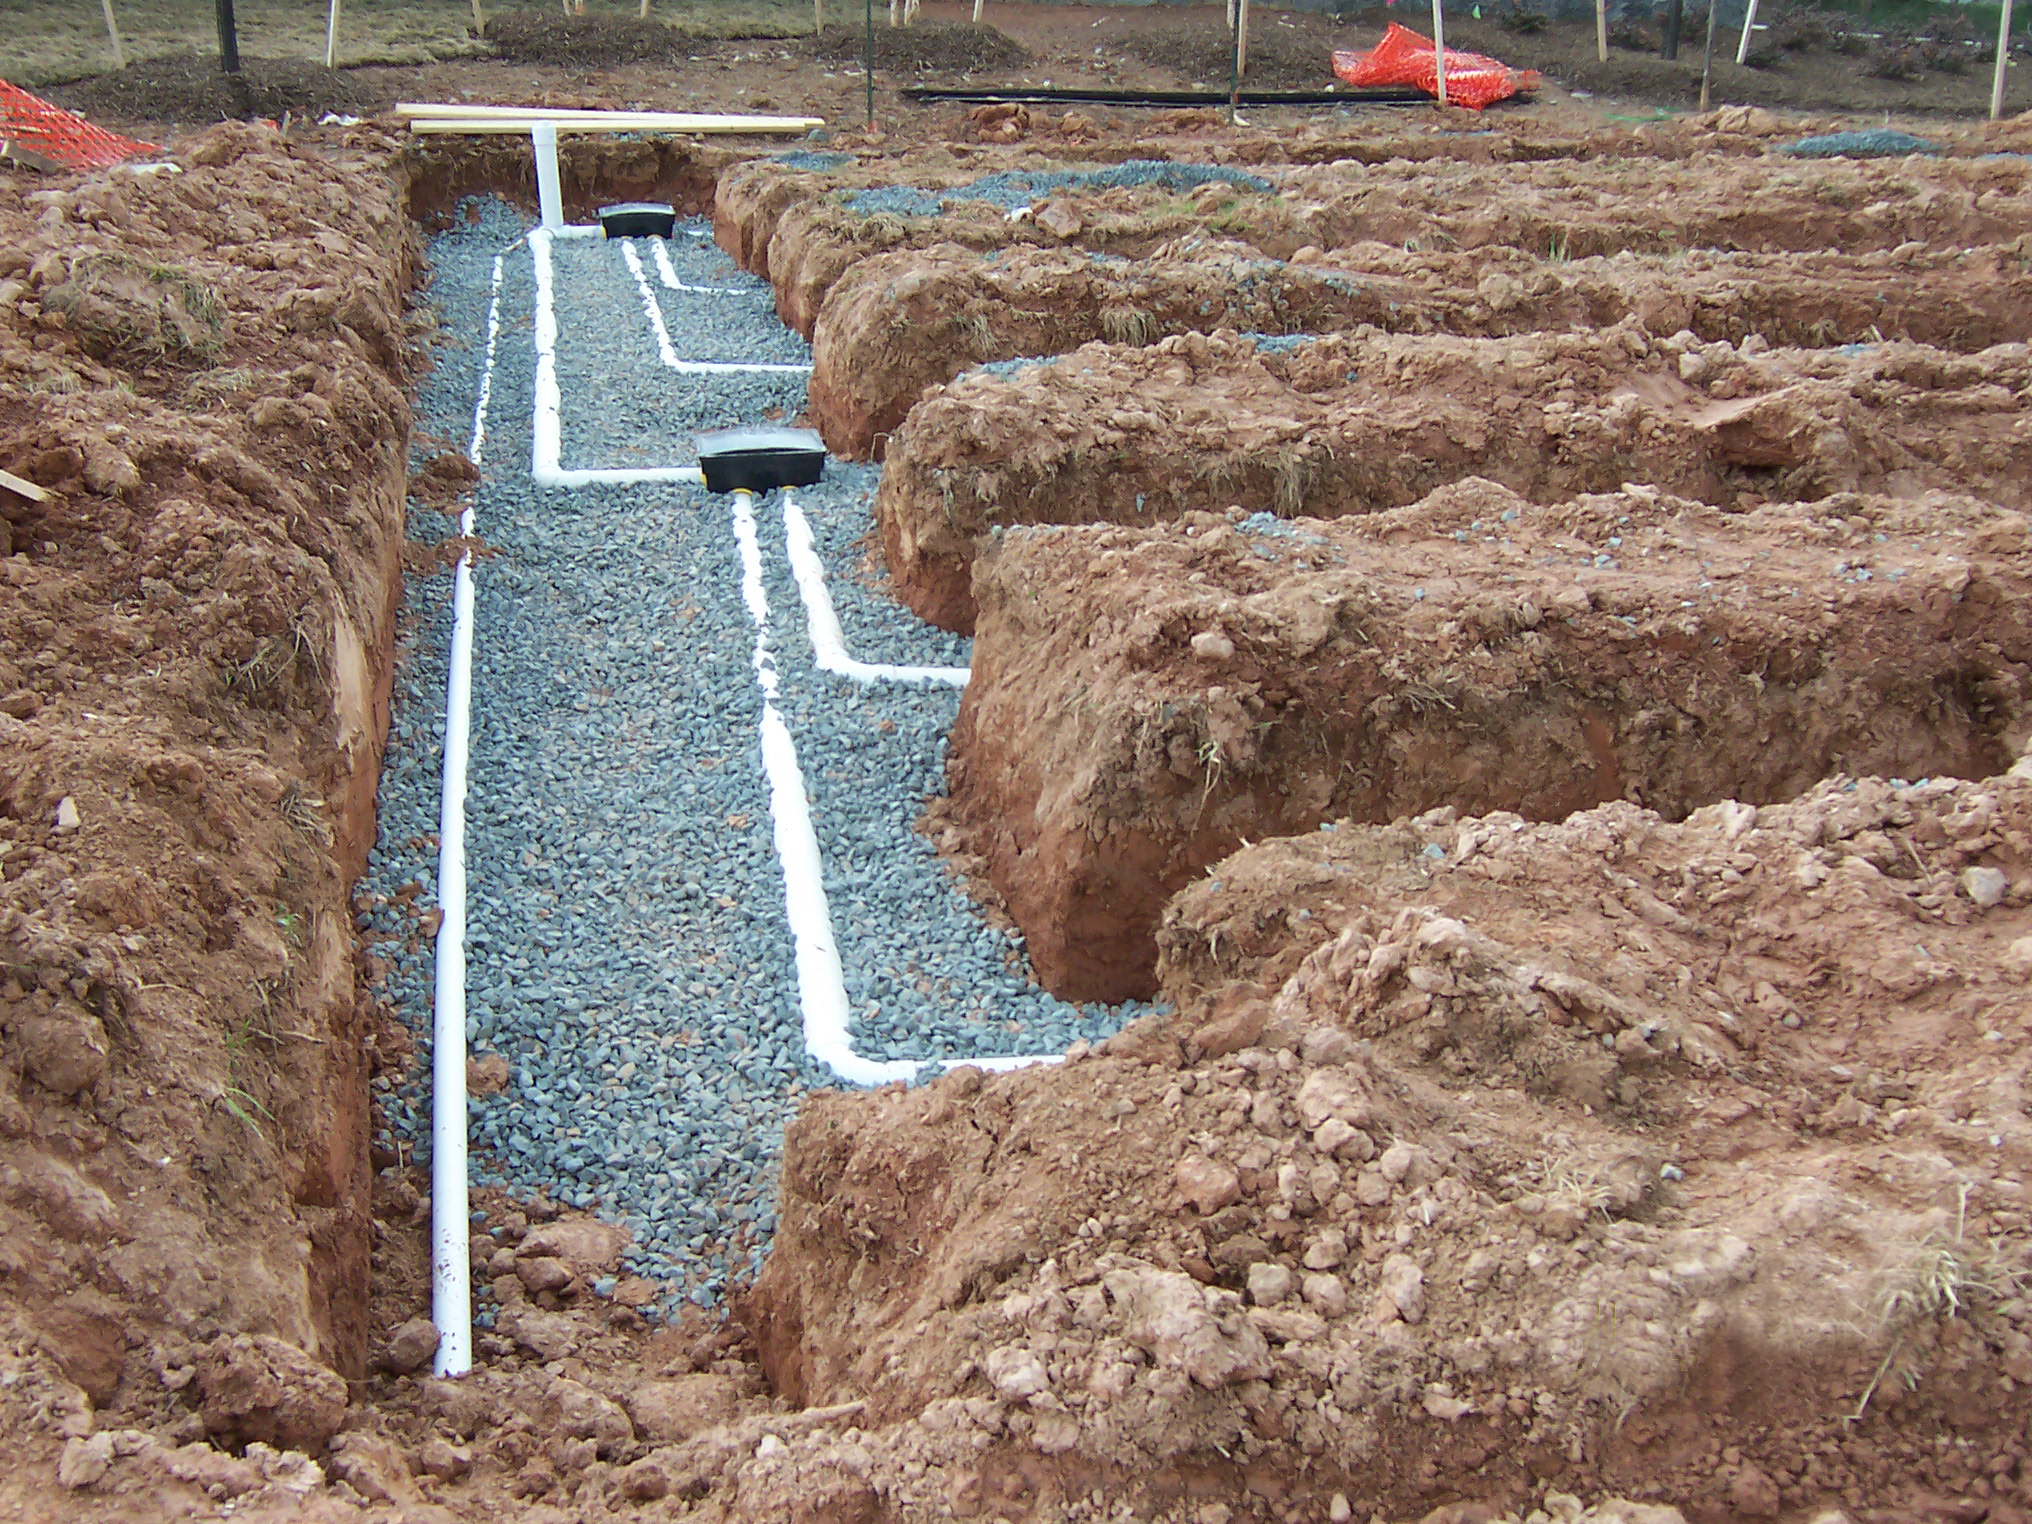 Onsite sewage system under construction